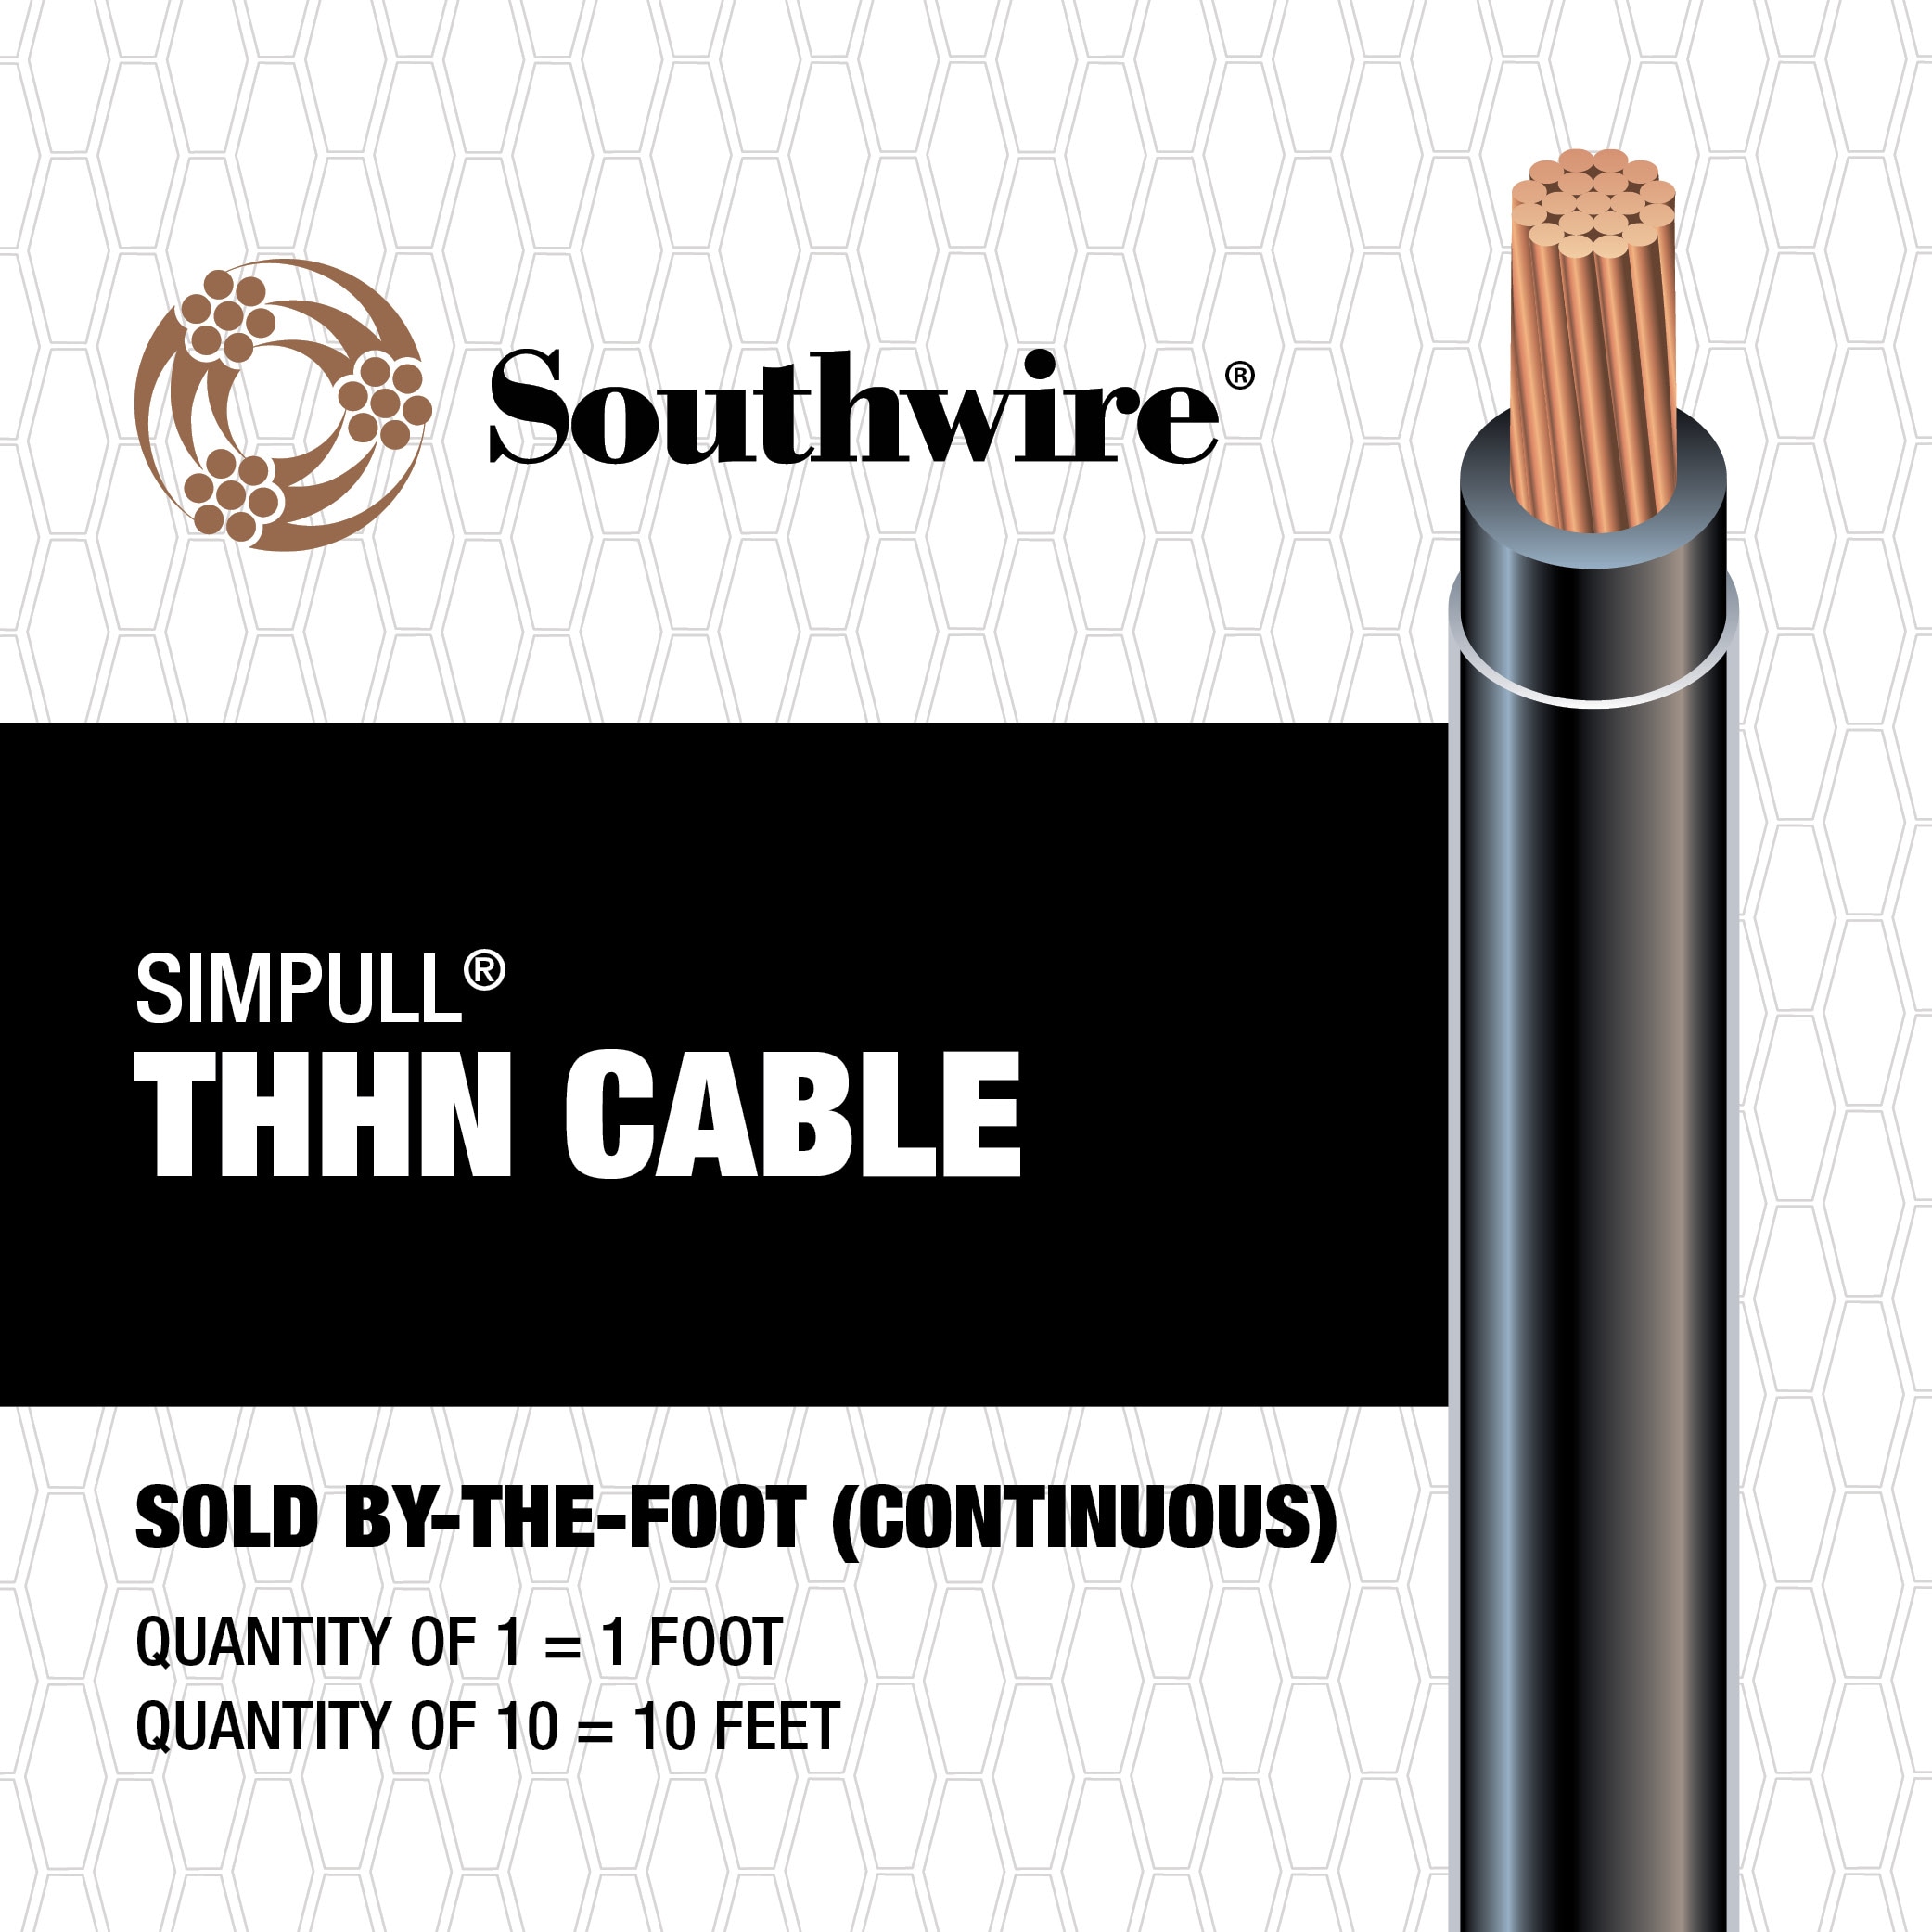 10 meters Copper Braided Grounding Wire Distribution Line Gold Silver Bare  Copper Wire Conductive Tape Copper